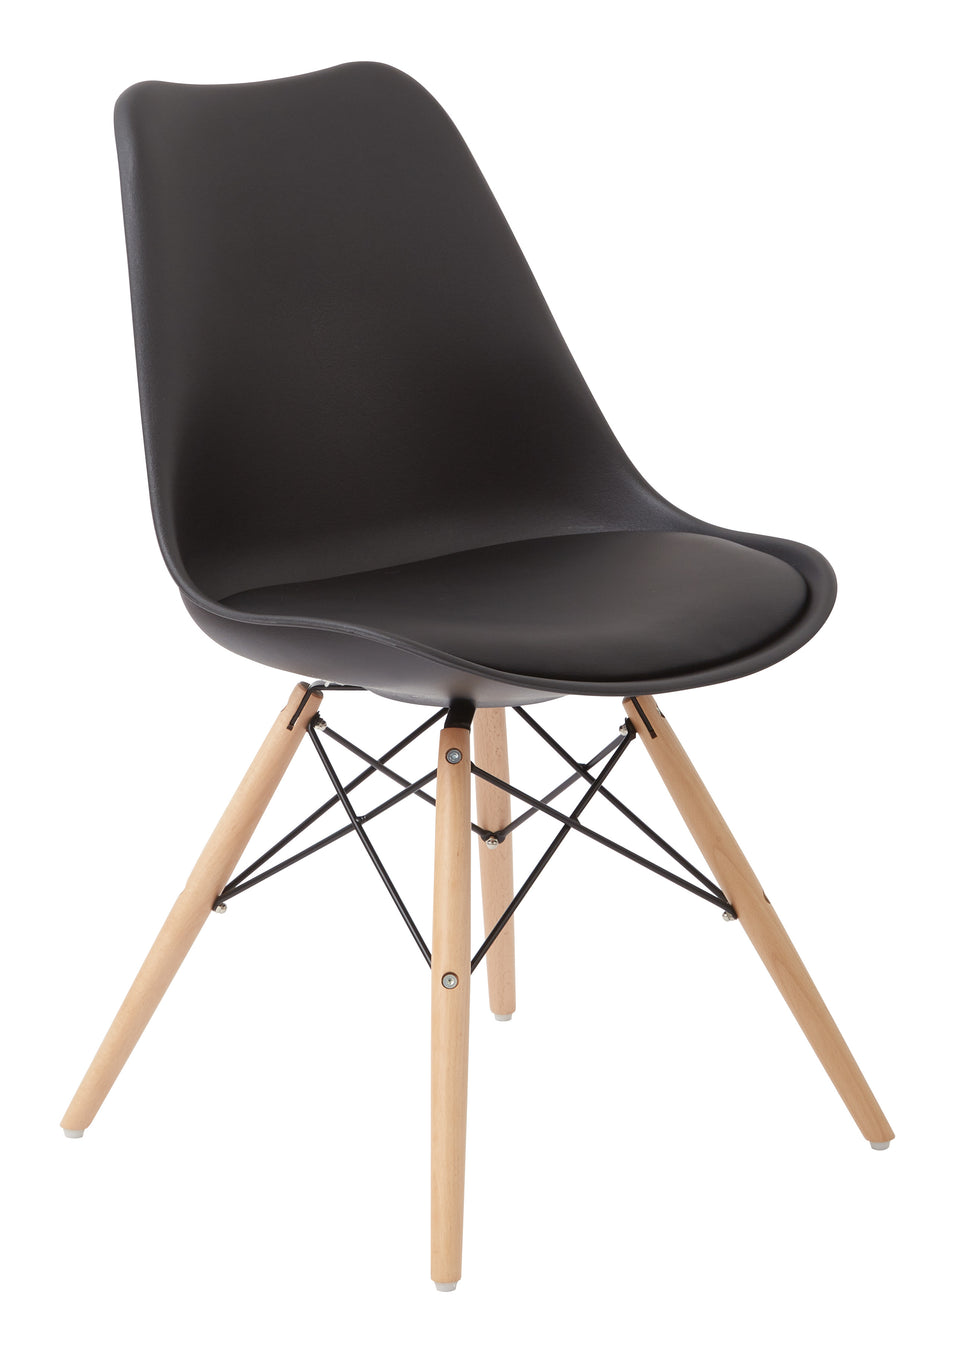 mid century modern aimes black bucket chair with natural post legs scandinavian design inspired from decurban.com